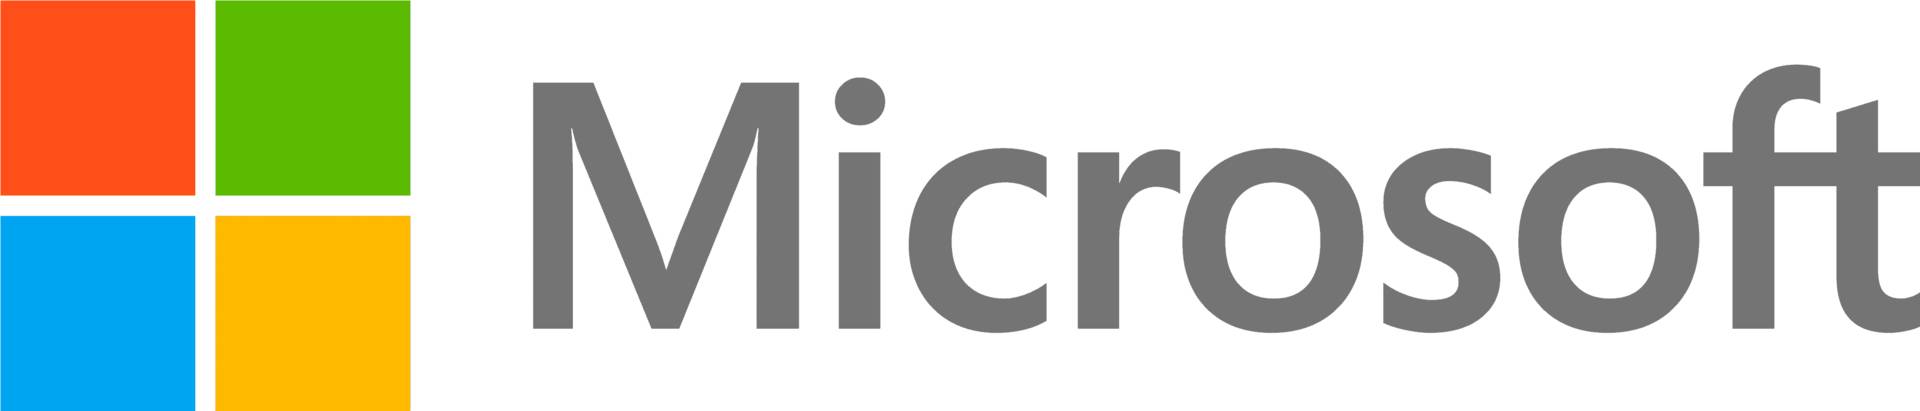 Microsoft DG7GMGF0G49W.0002 Software-Lizenz/-Upgrade 1 Lizenz(en) (DG7GMGF0G49W.0002) von Microsoft